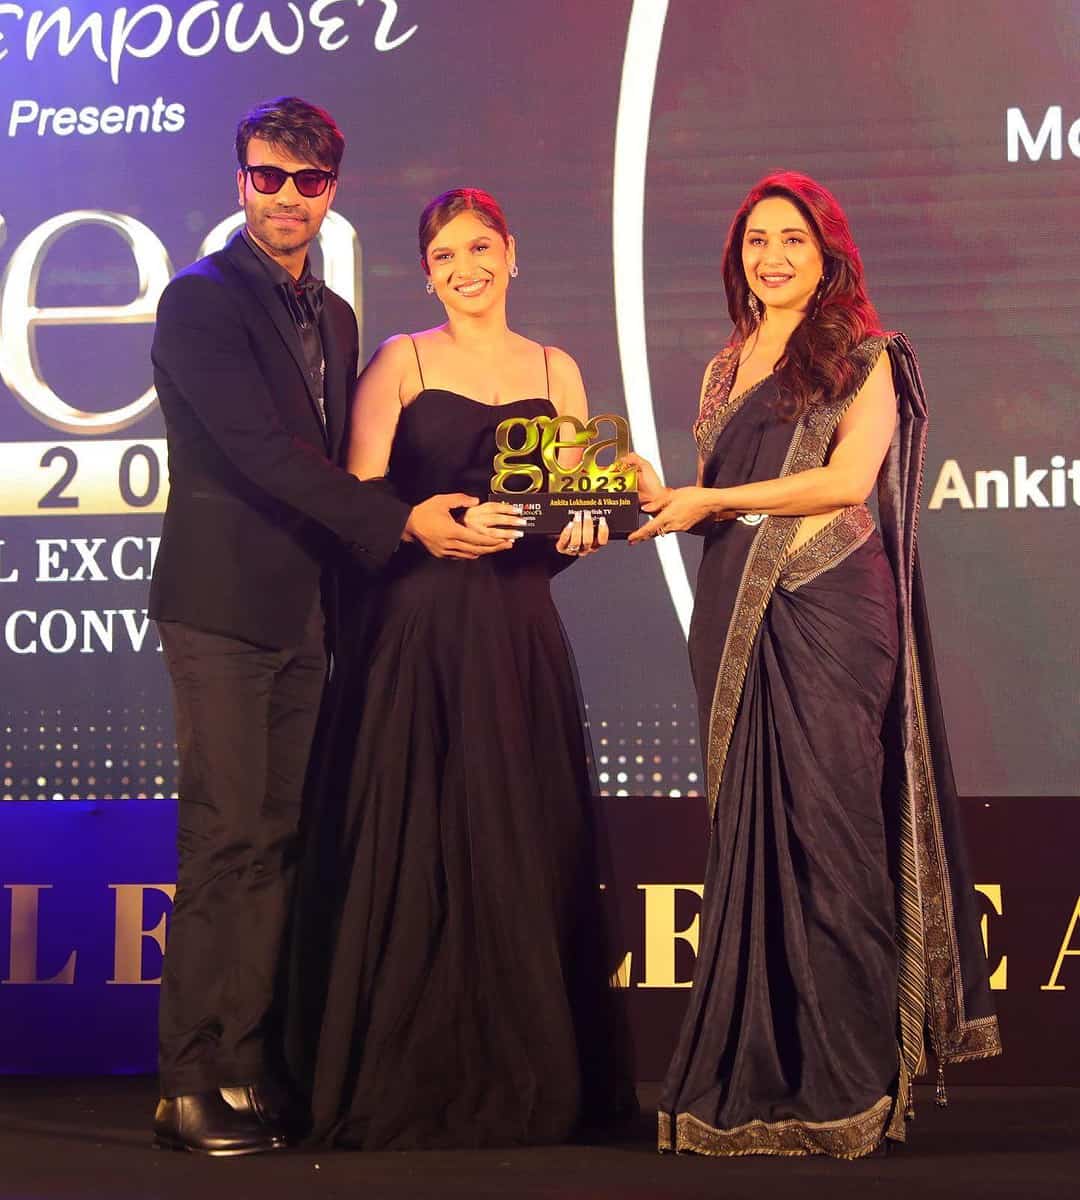 Ankita Lokhande - Career, Awards, And Achievements